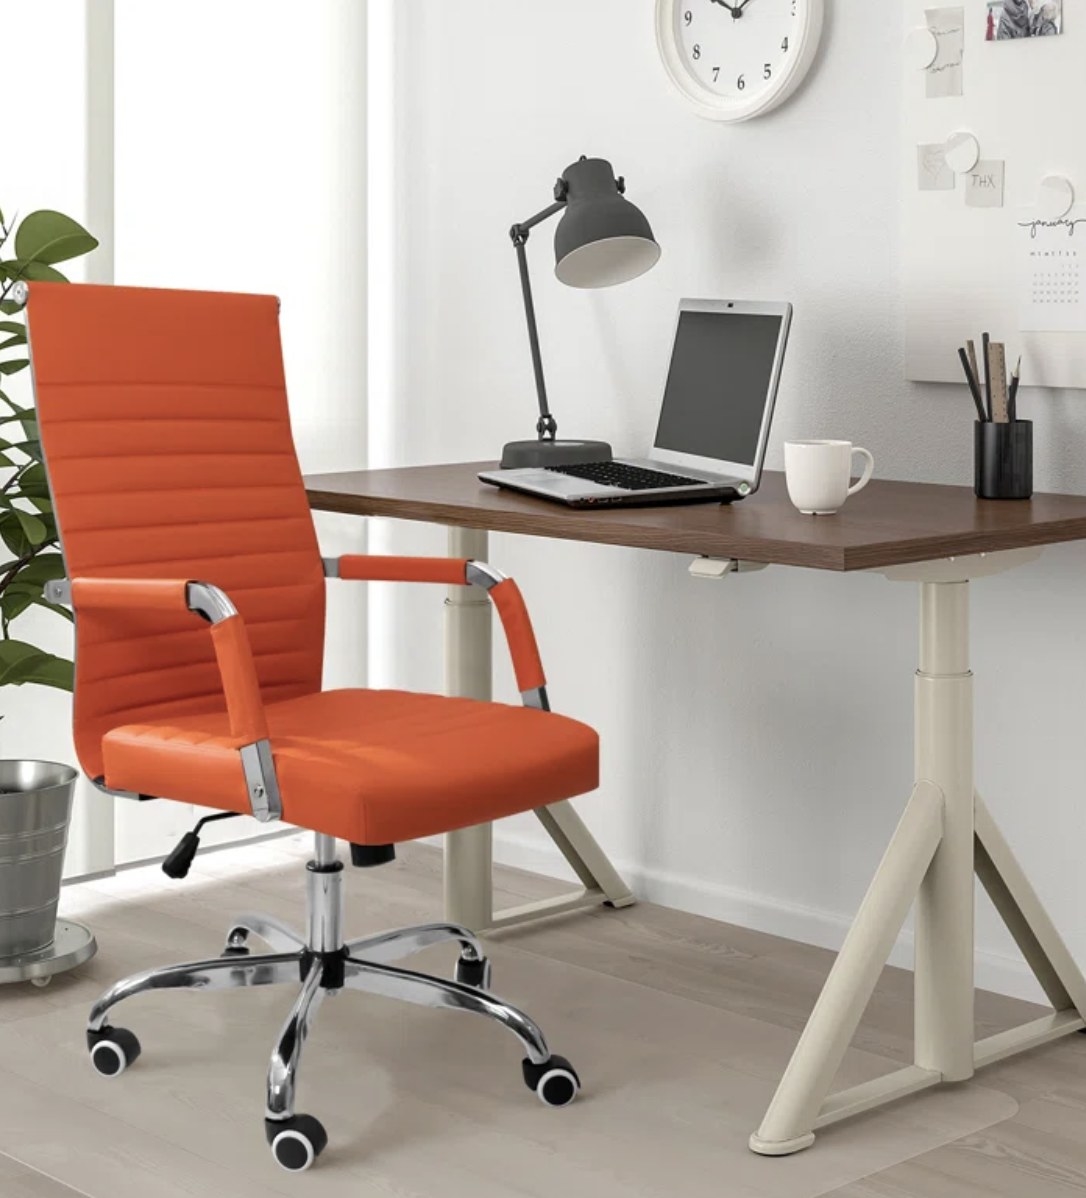 An orange desk chair on wheels in front of a desk